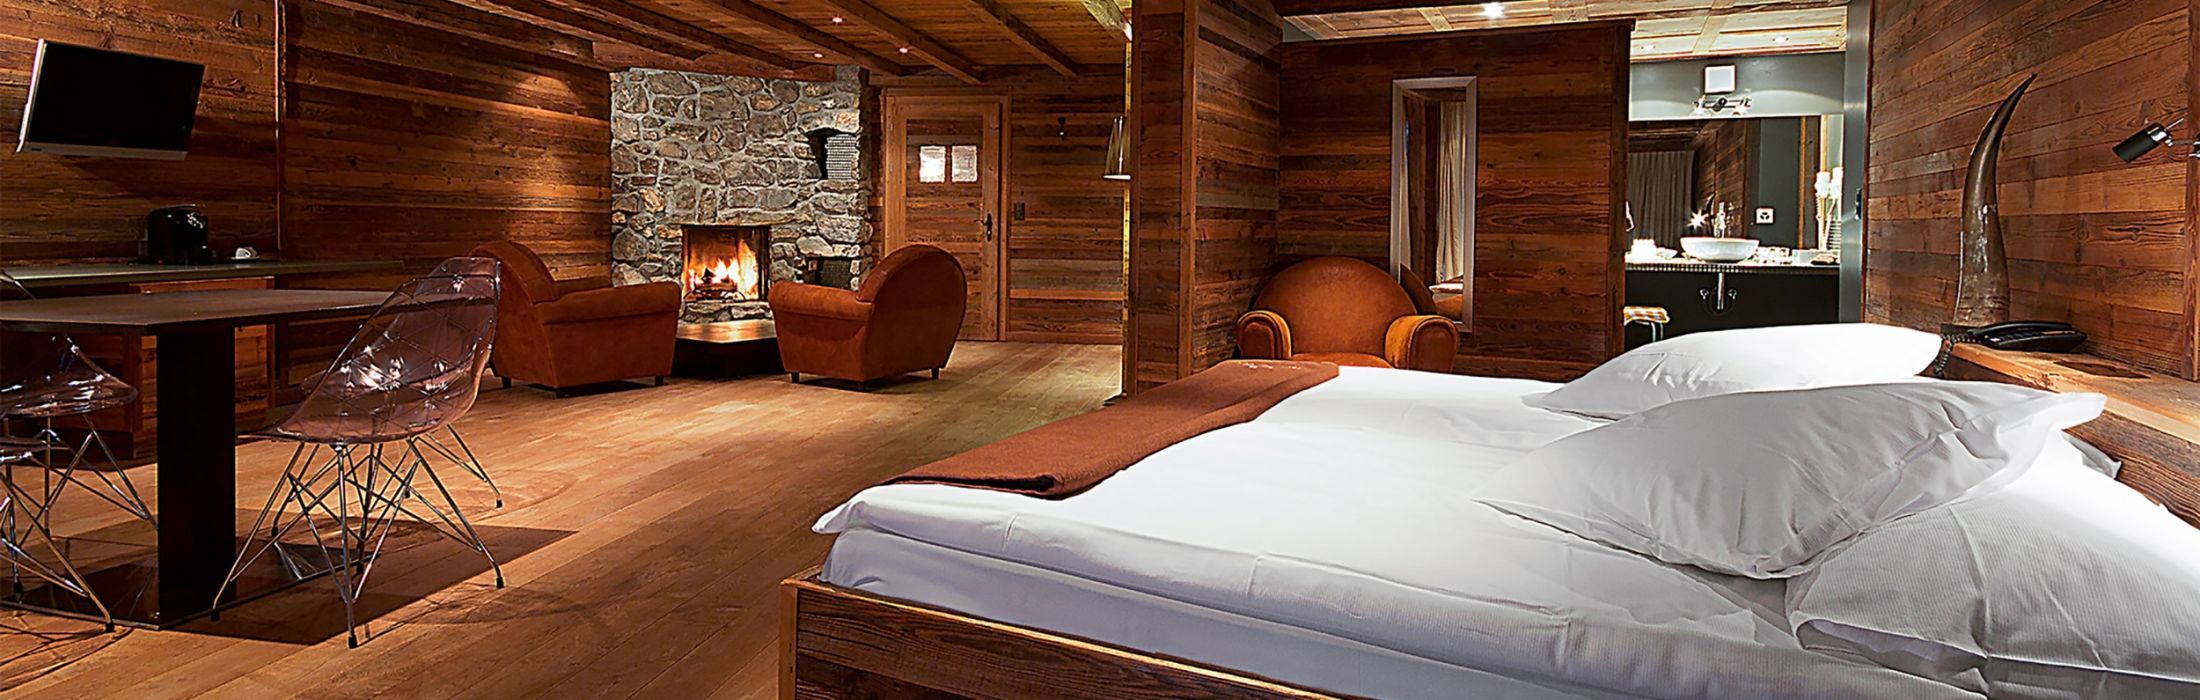 Hotel de l'Etrier | Hotel Rooms in Crans Montana | Rooms & Suites